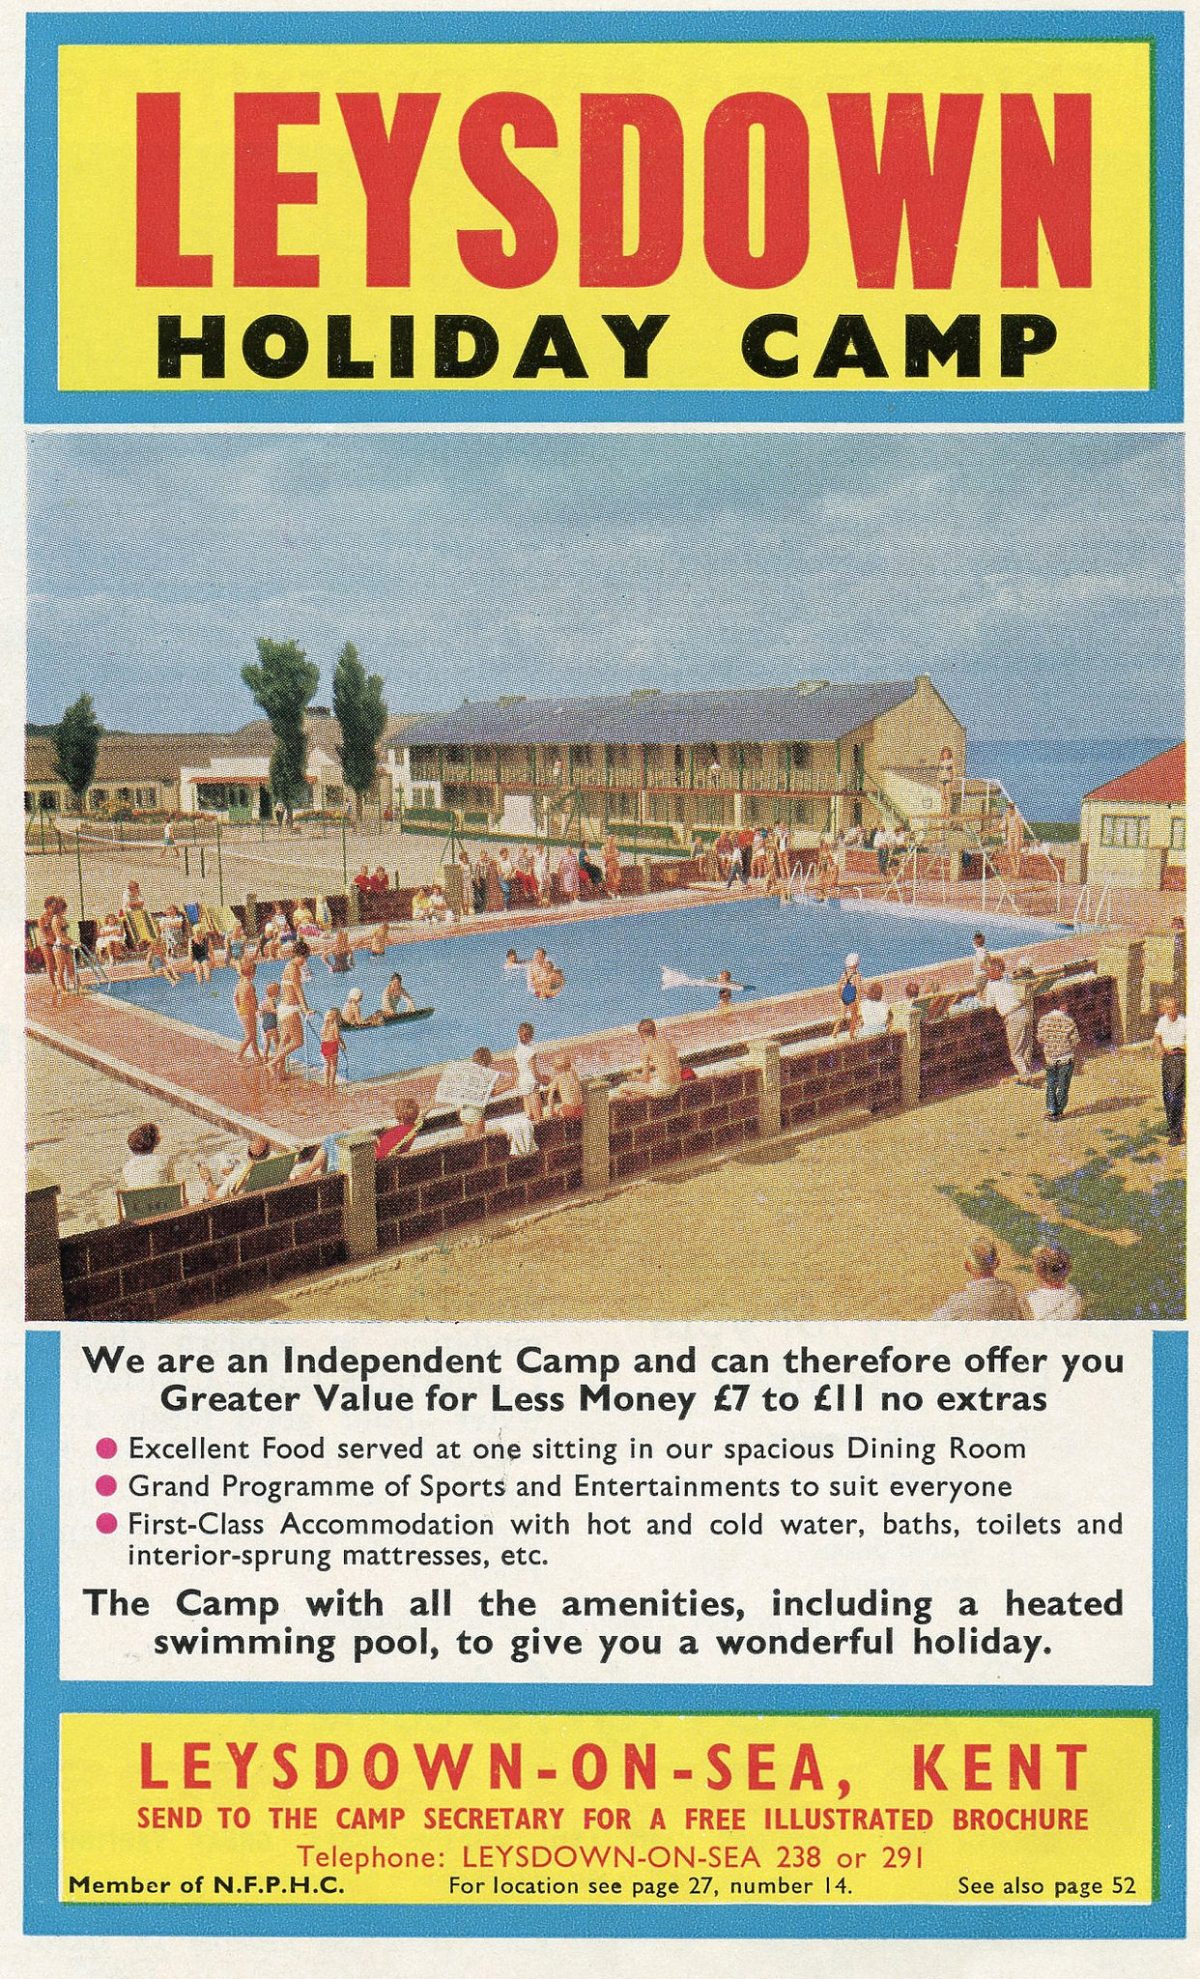 British holiday camps